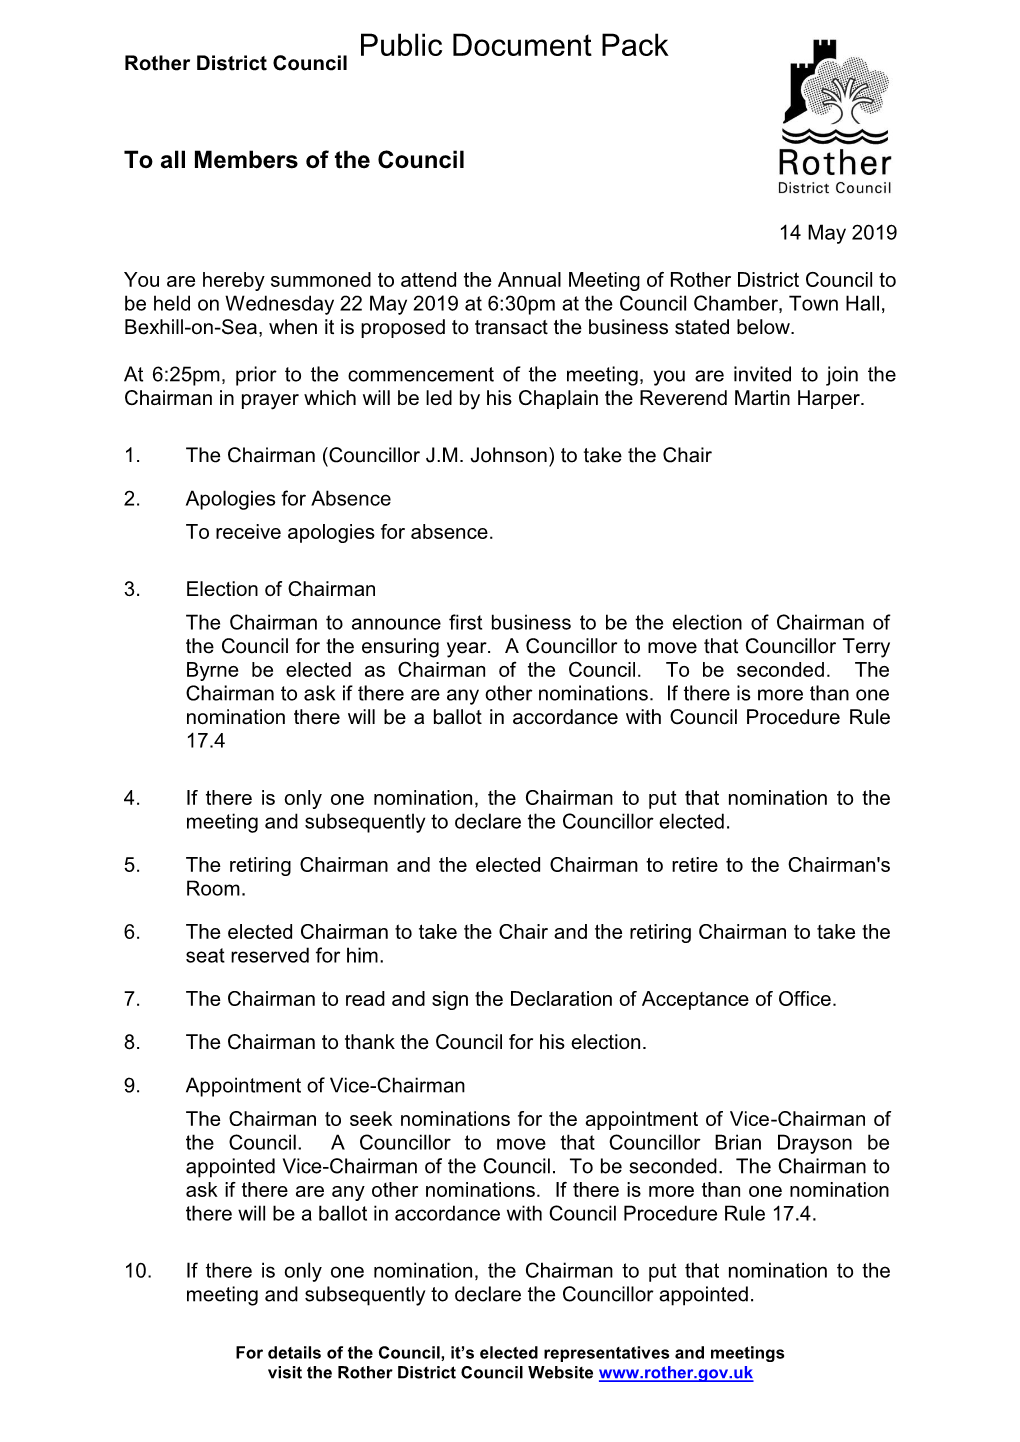 (Public Pack)Agenda Document for Council, 22/05/2019 18:30